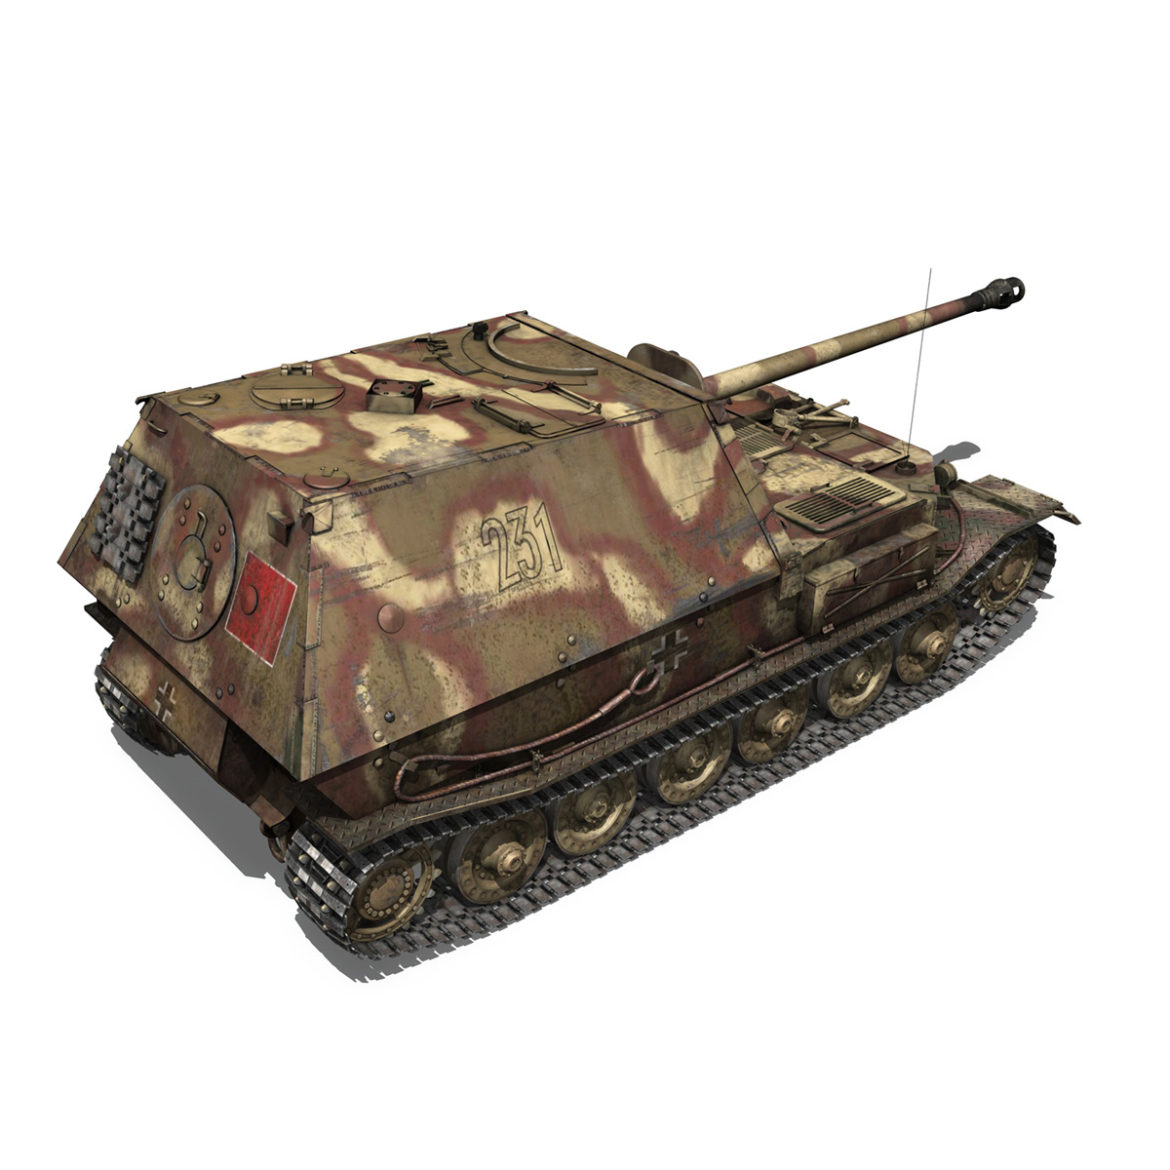 ferdinand tank destroyer – tiger (p) – 231 3d model 3ds fbx c4d lwo obj 295022